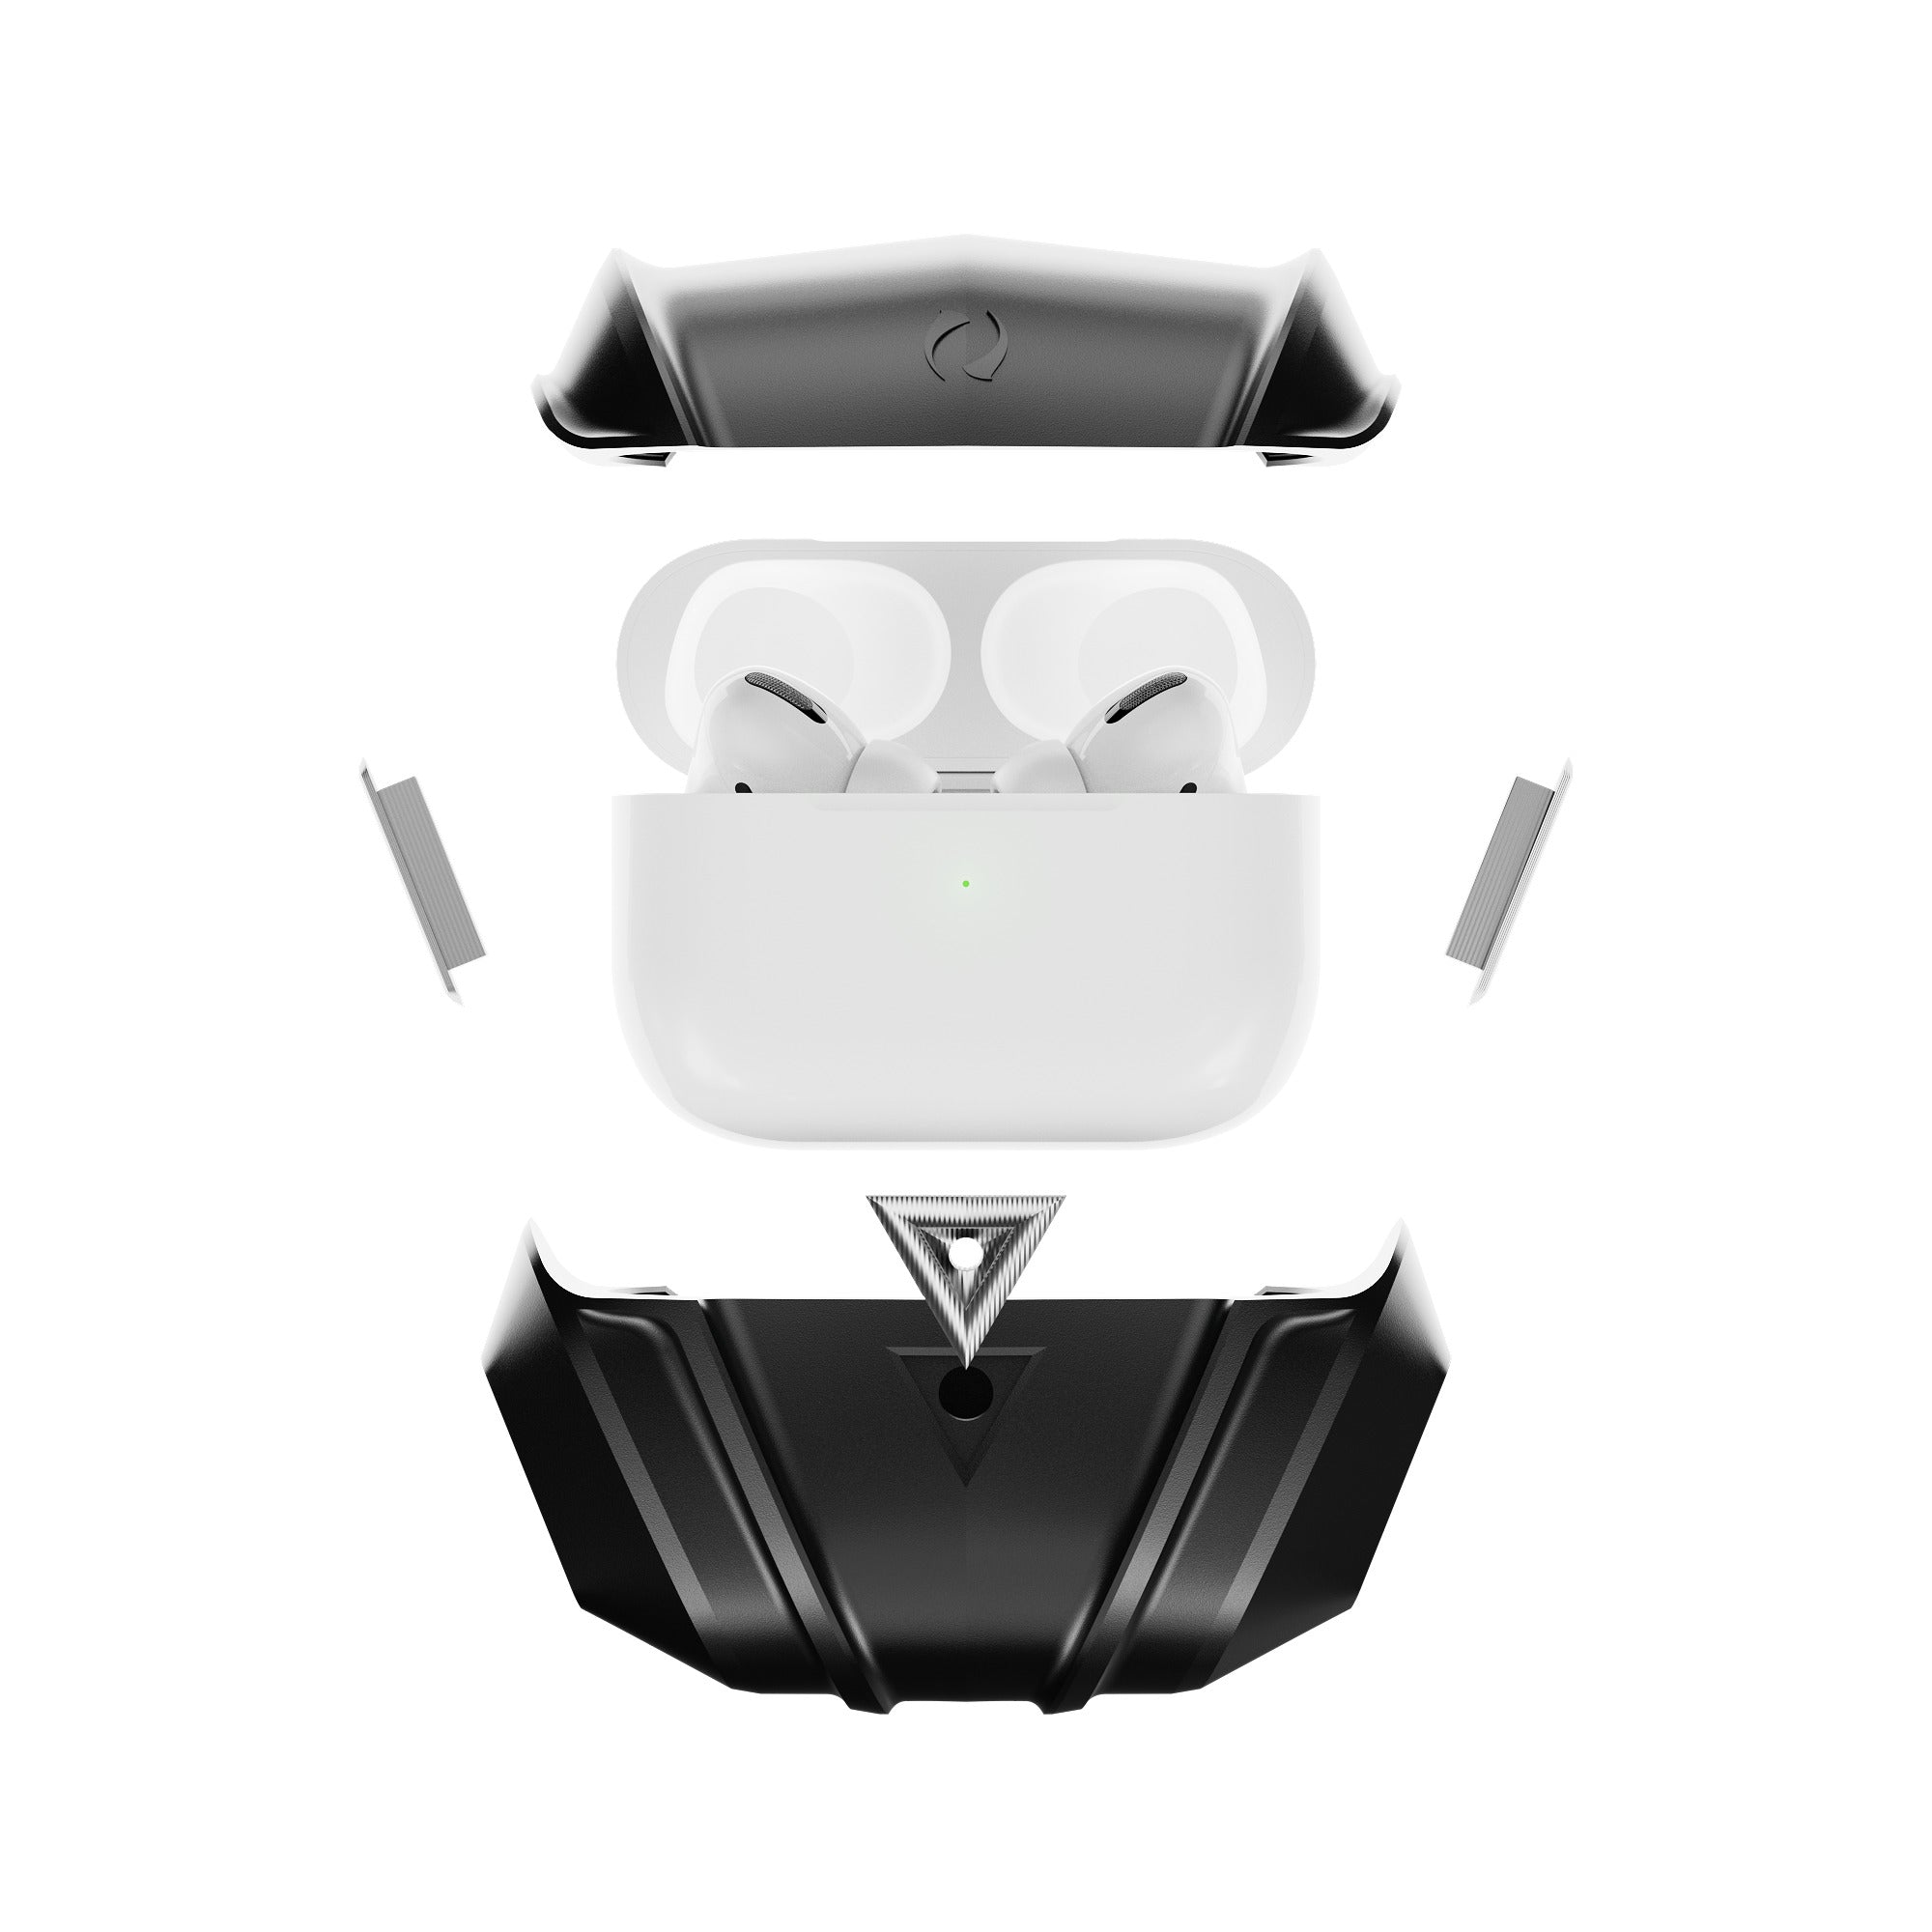 12 Best Designer Airpod Cases - Luxury AirPod Pro Cases